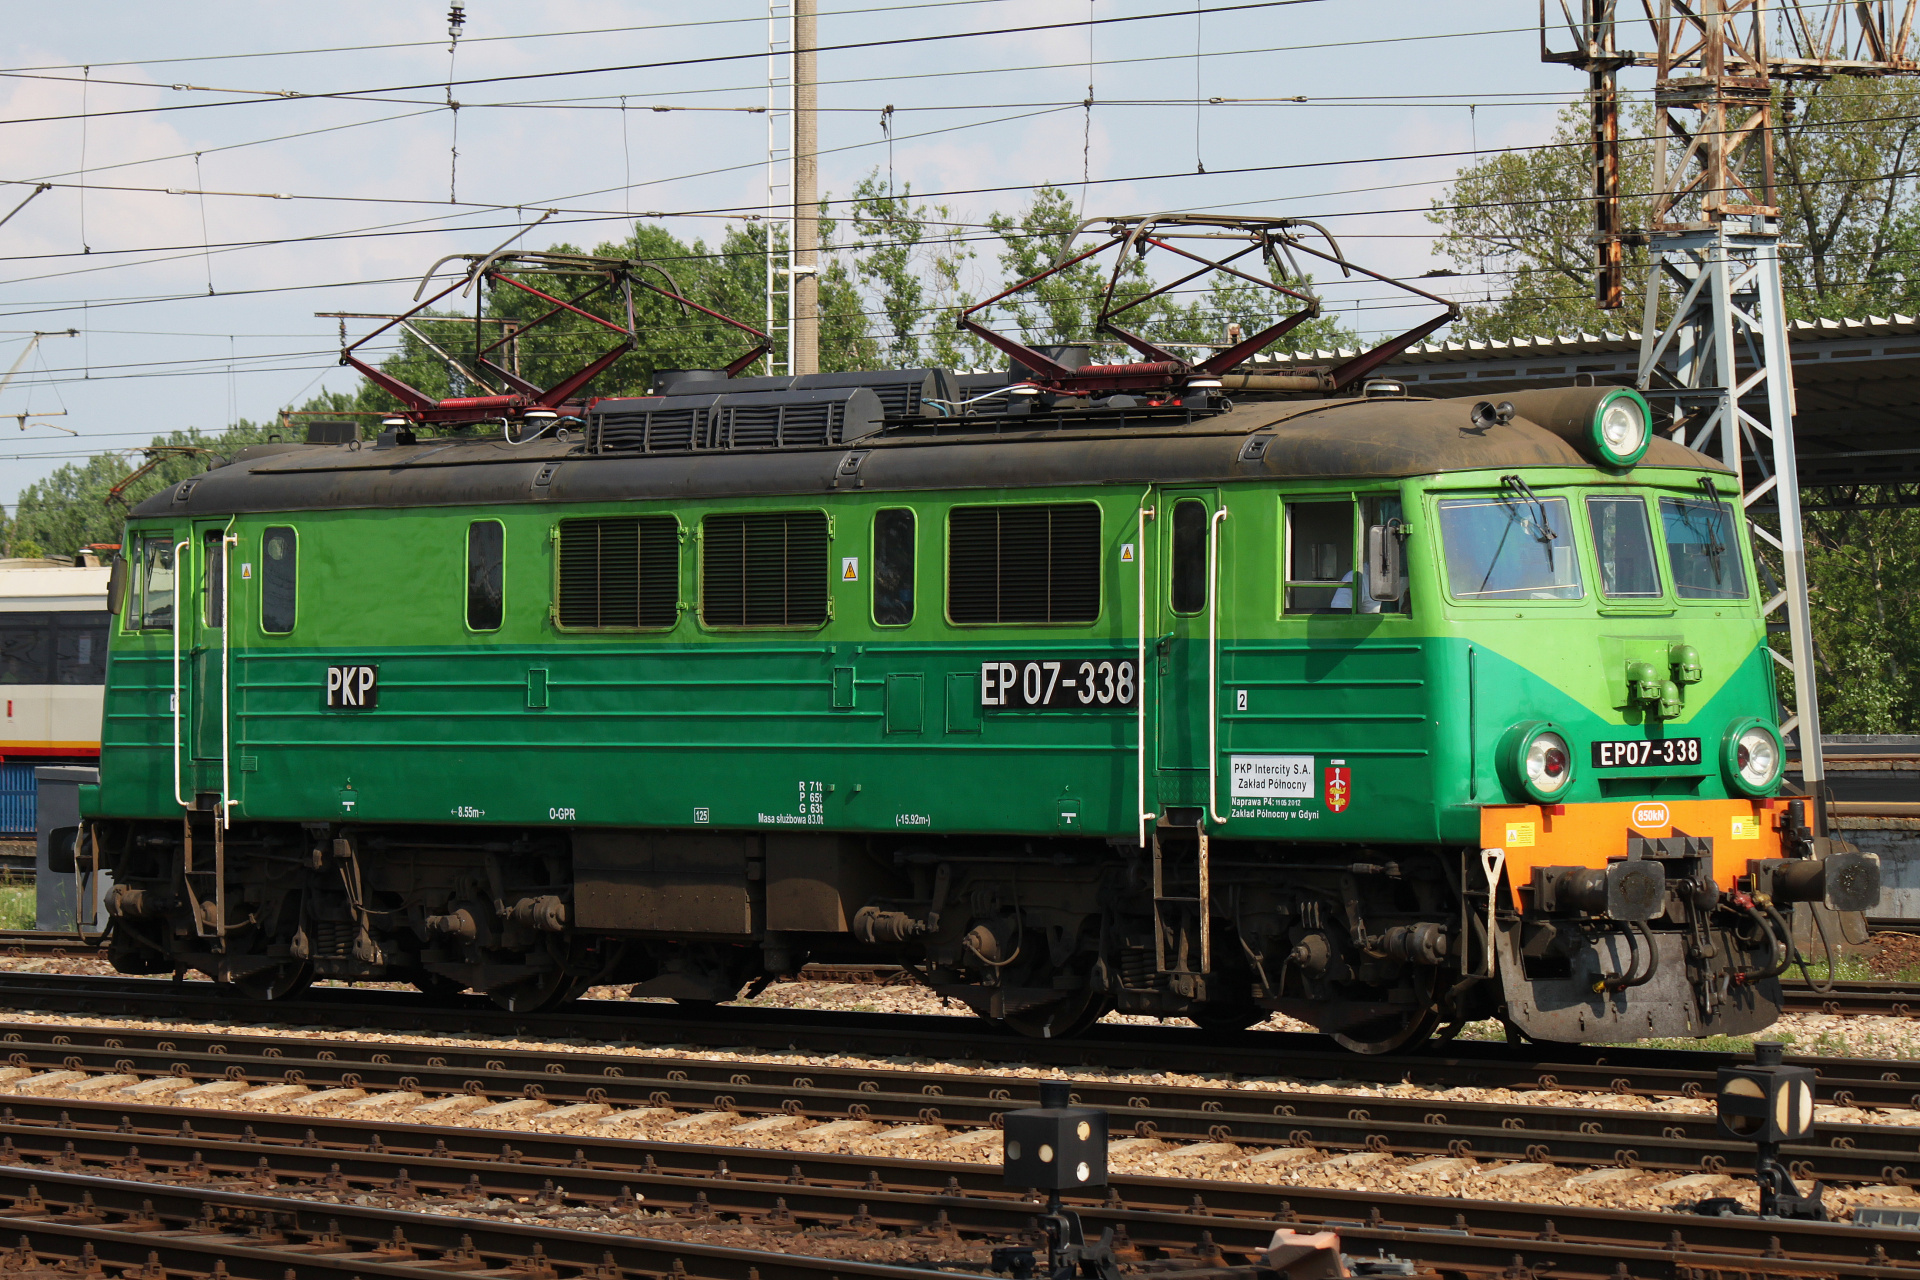 EP07-338 (retro livery) (Vehicles » Trains and Locomotives » HCP 303E)